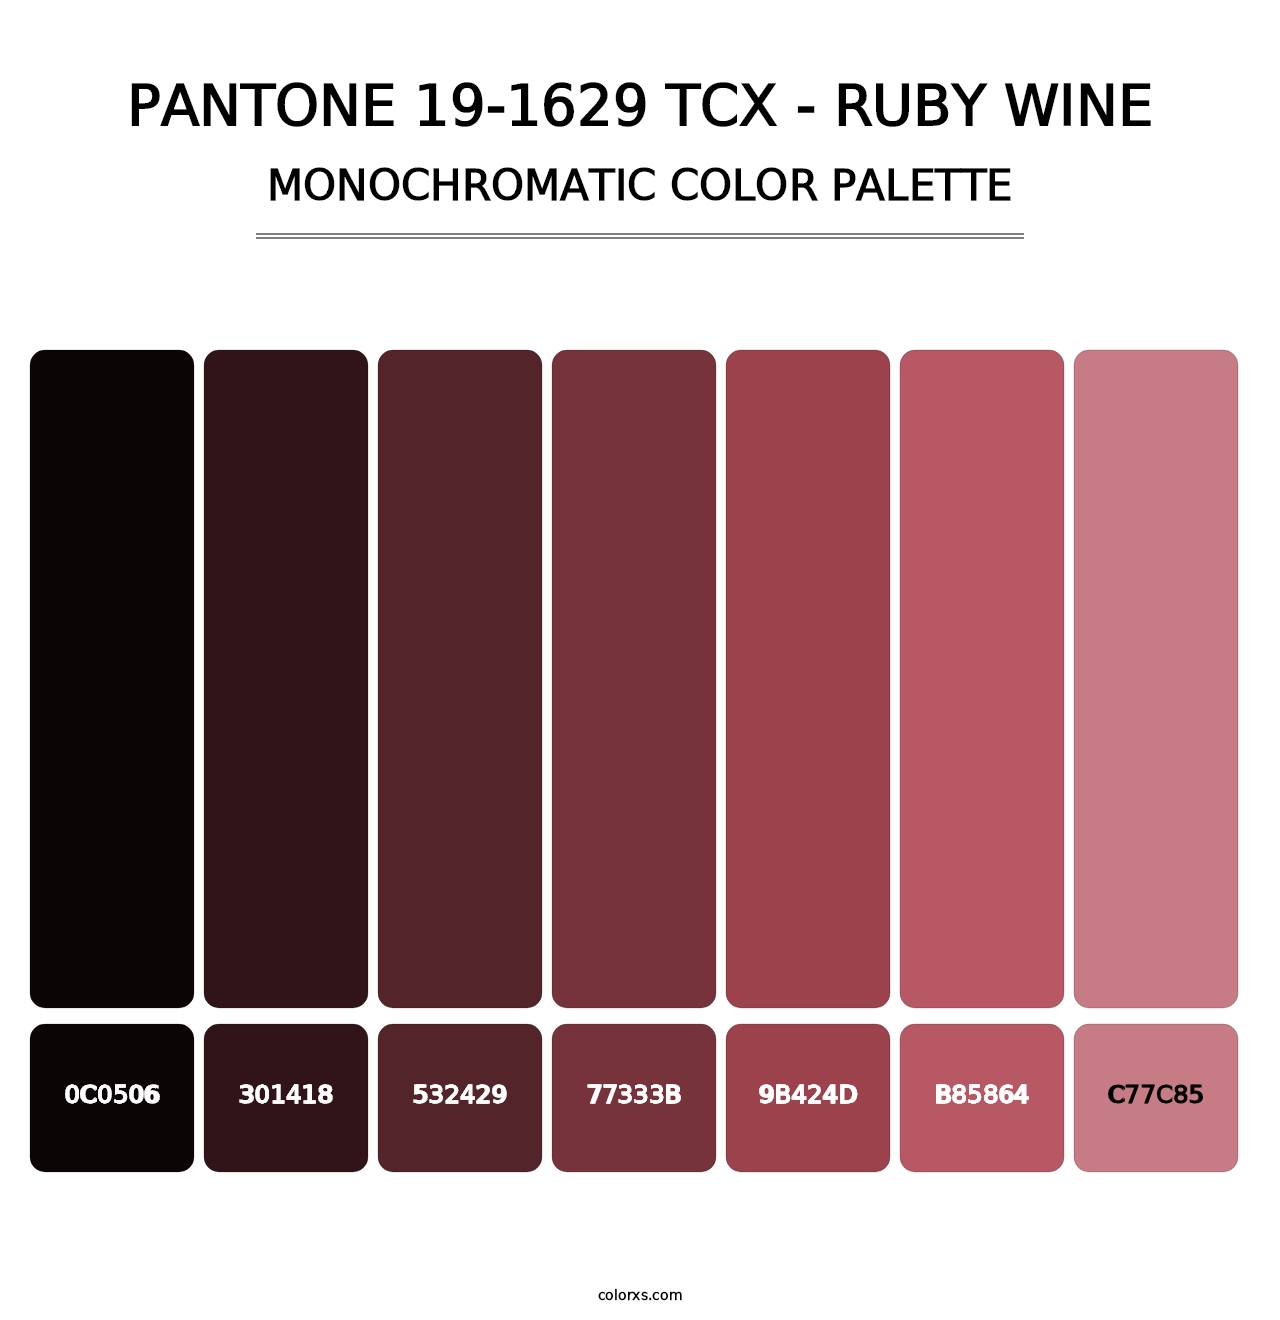 PANTONE 19-1629 TCX - Ruby Wine - Monochromatic Color Palette